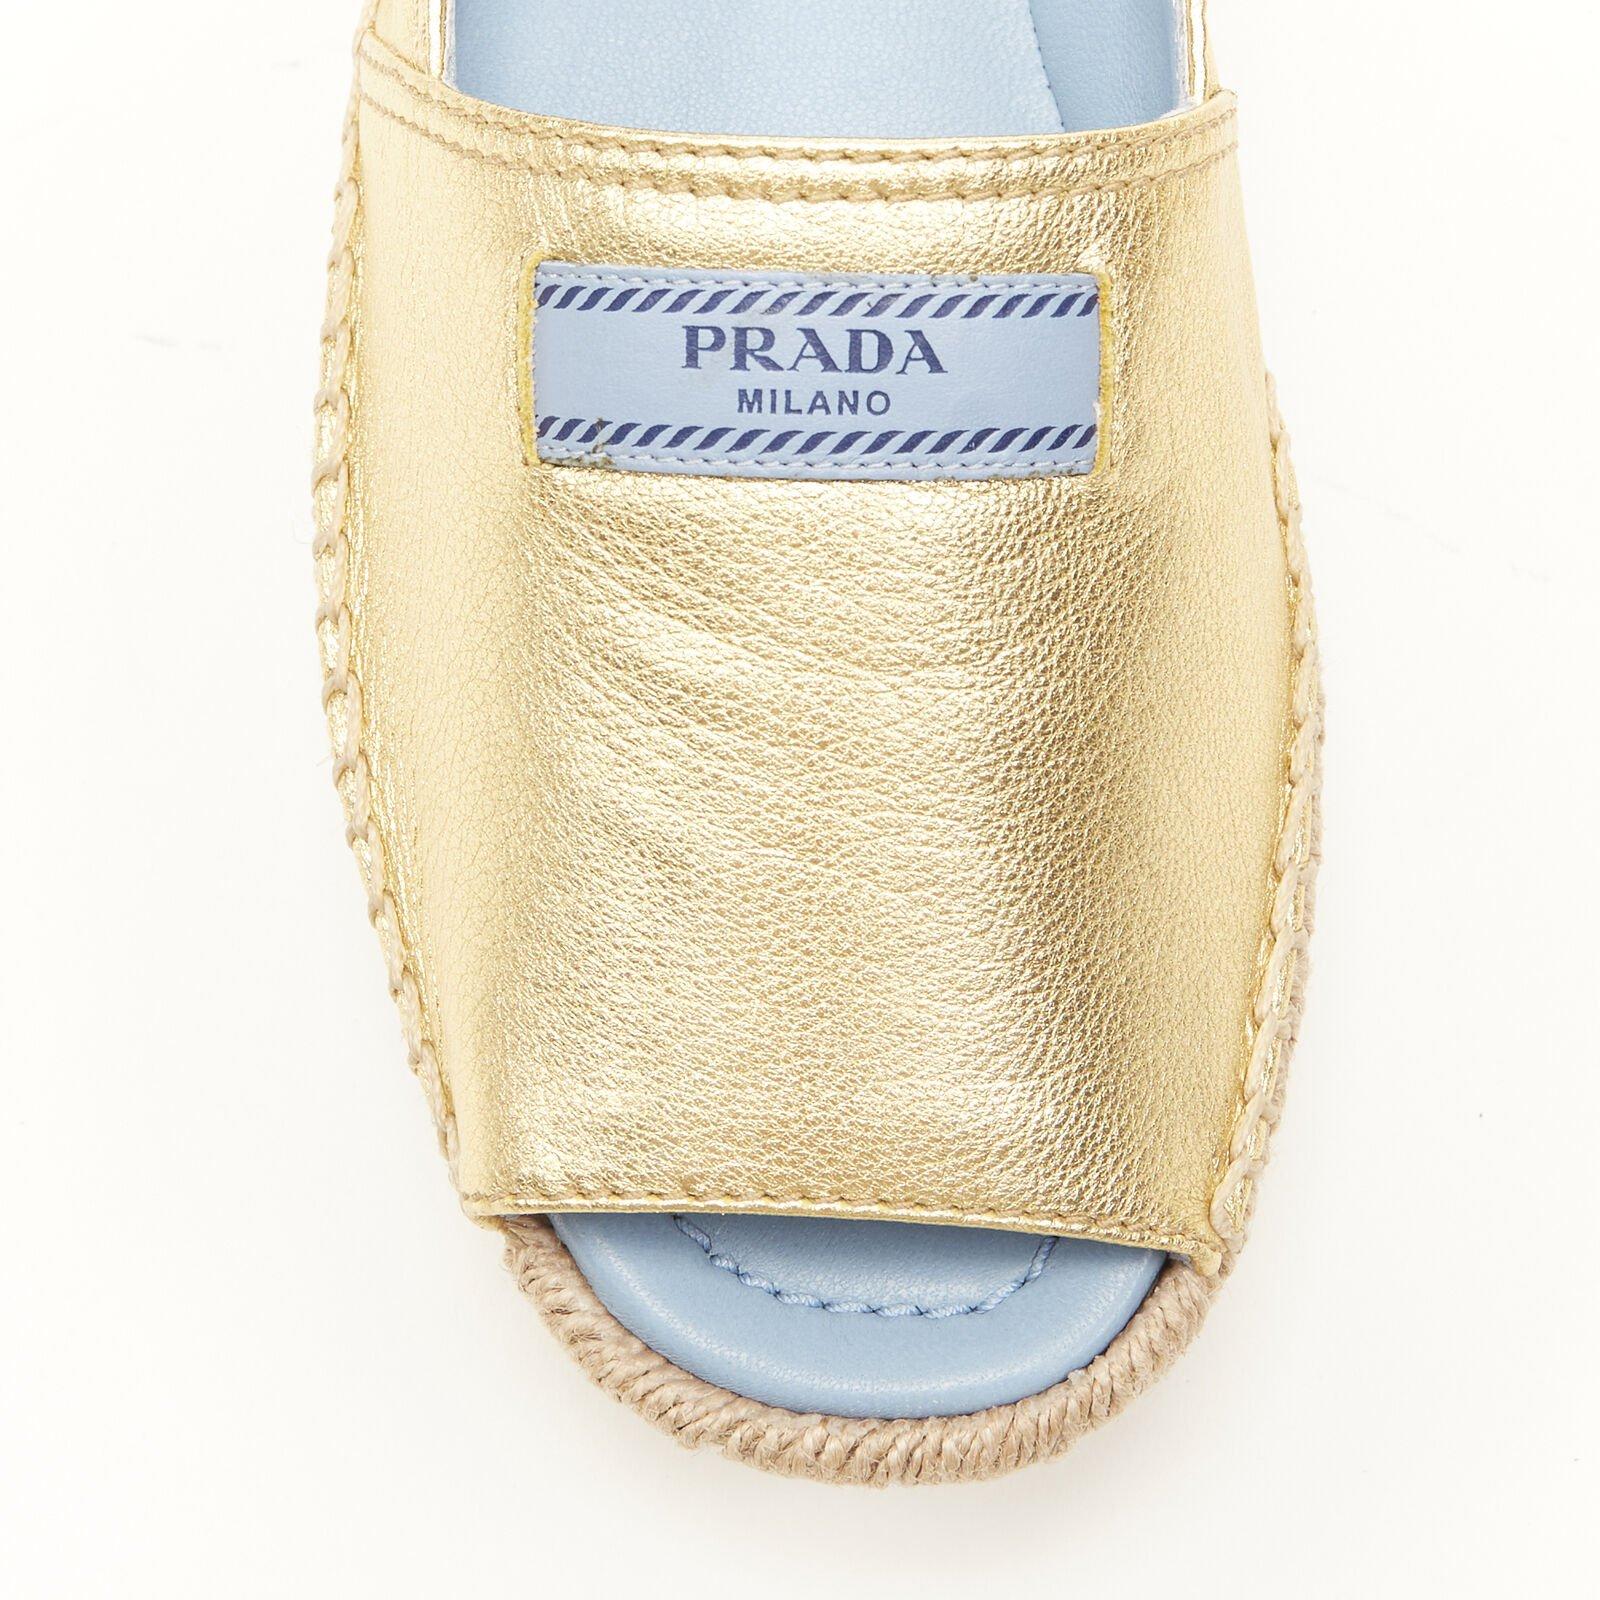 PRADA metallic gold leather logo peep toe jute platform espadrille shoe EU38 4